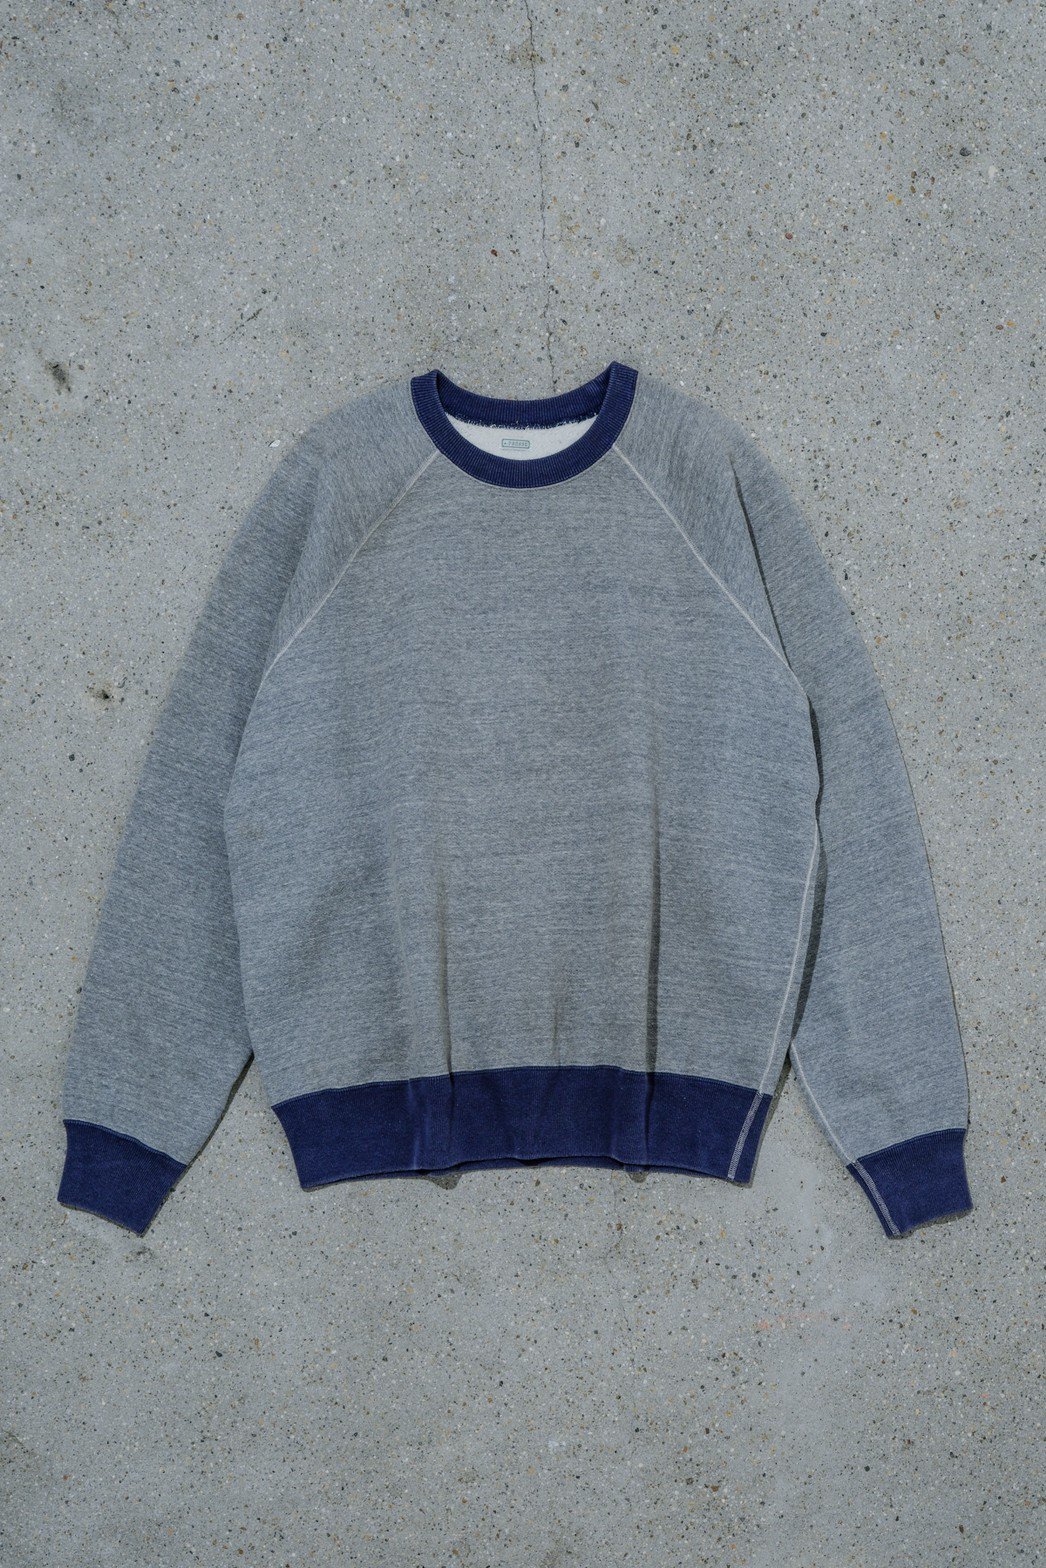 A.PRESSE / Vintage Sweatshirt Gray